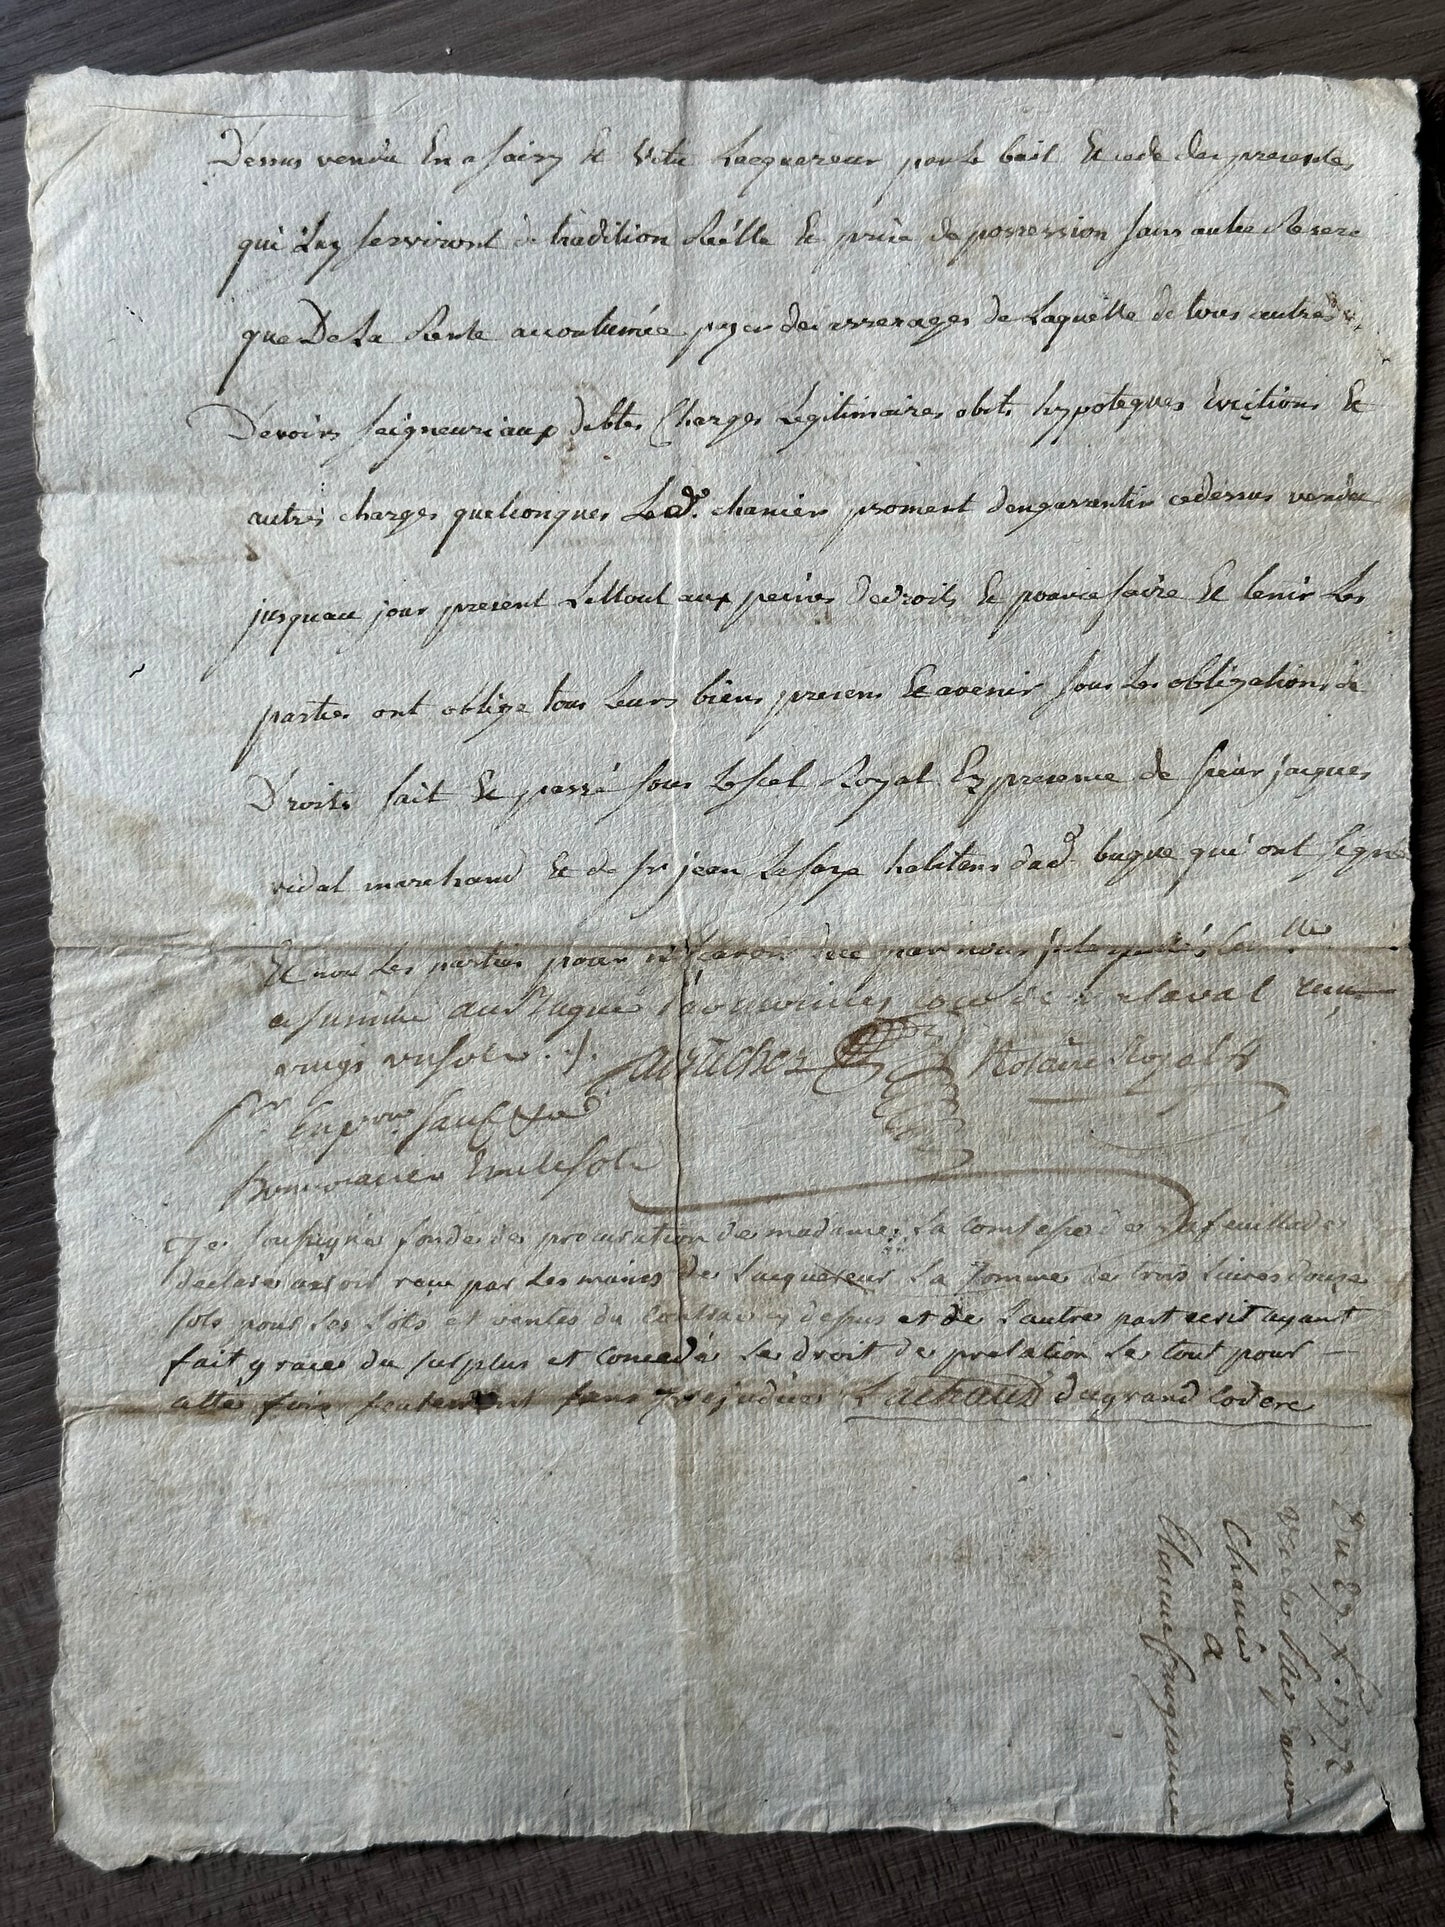 1772 French Manuscript